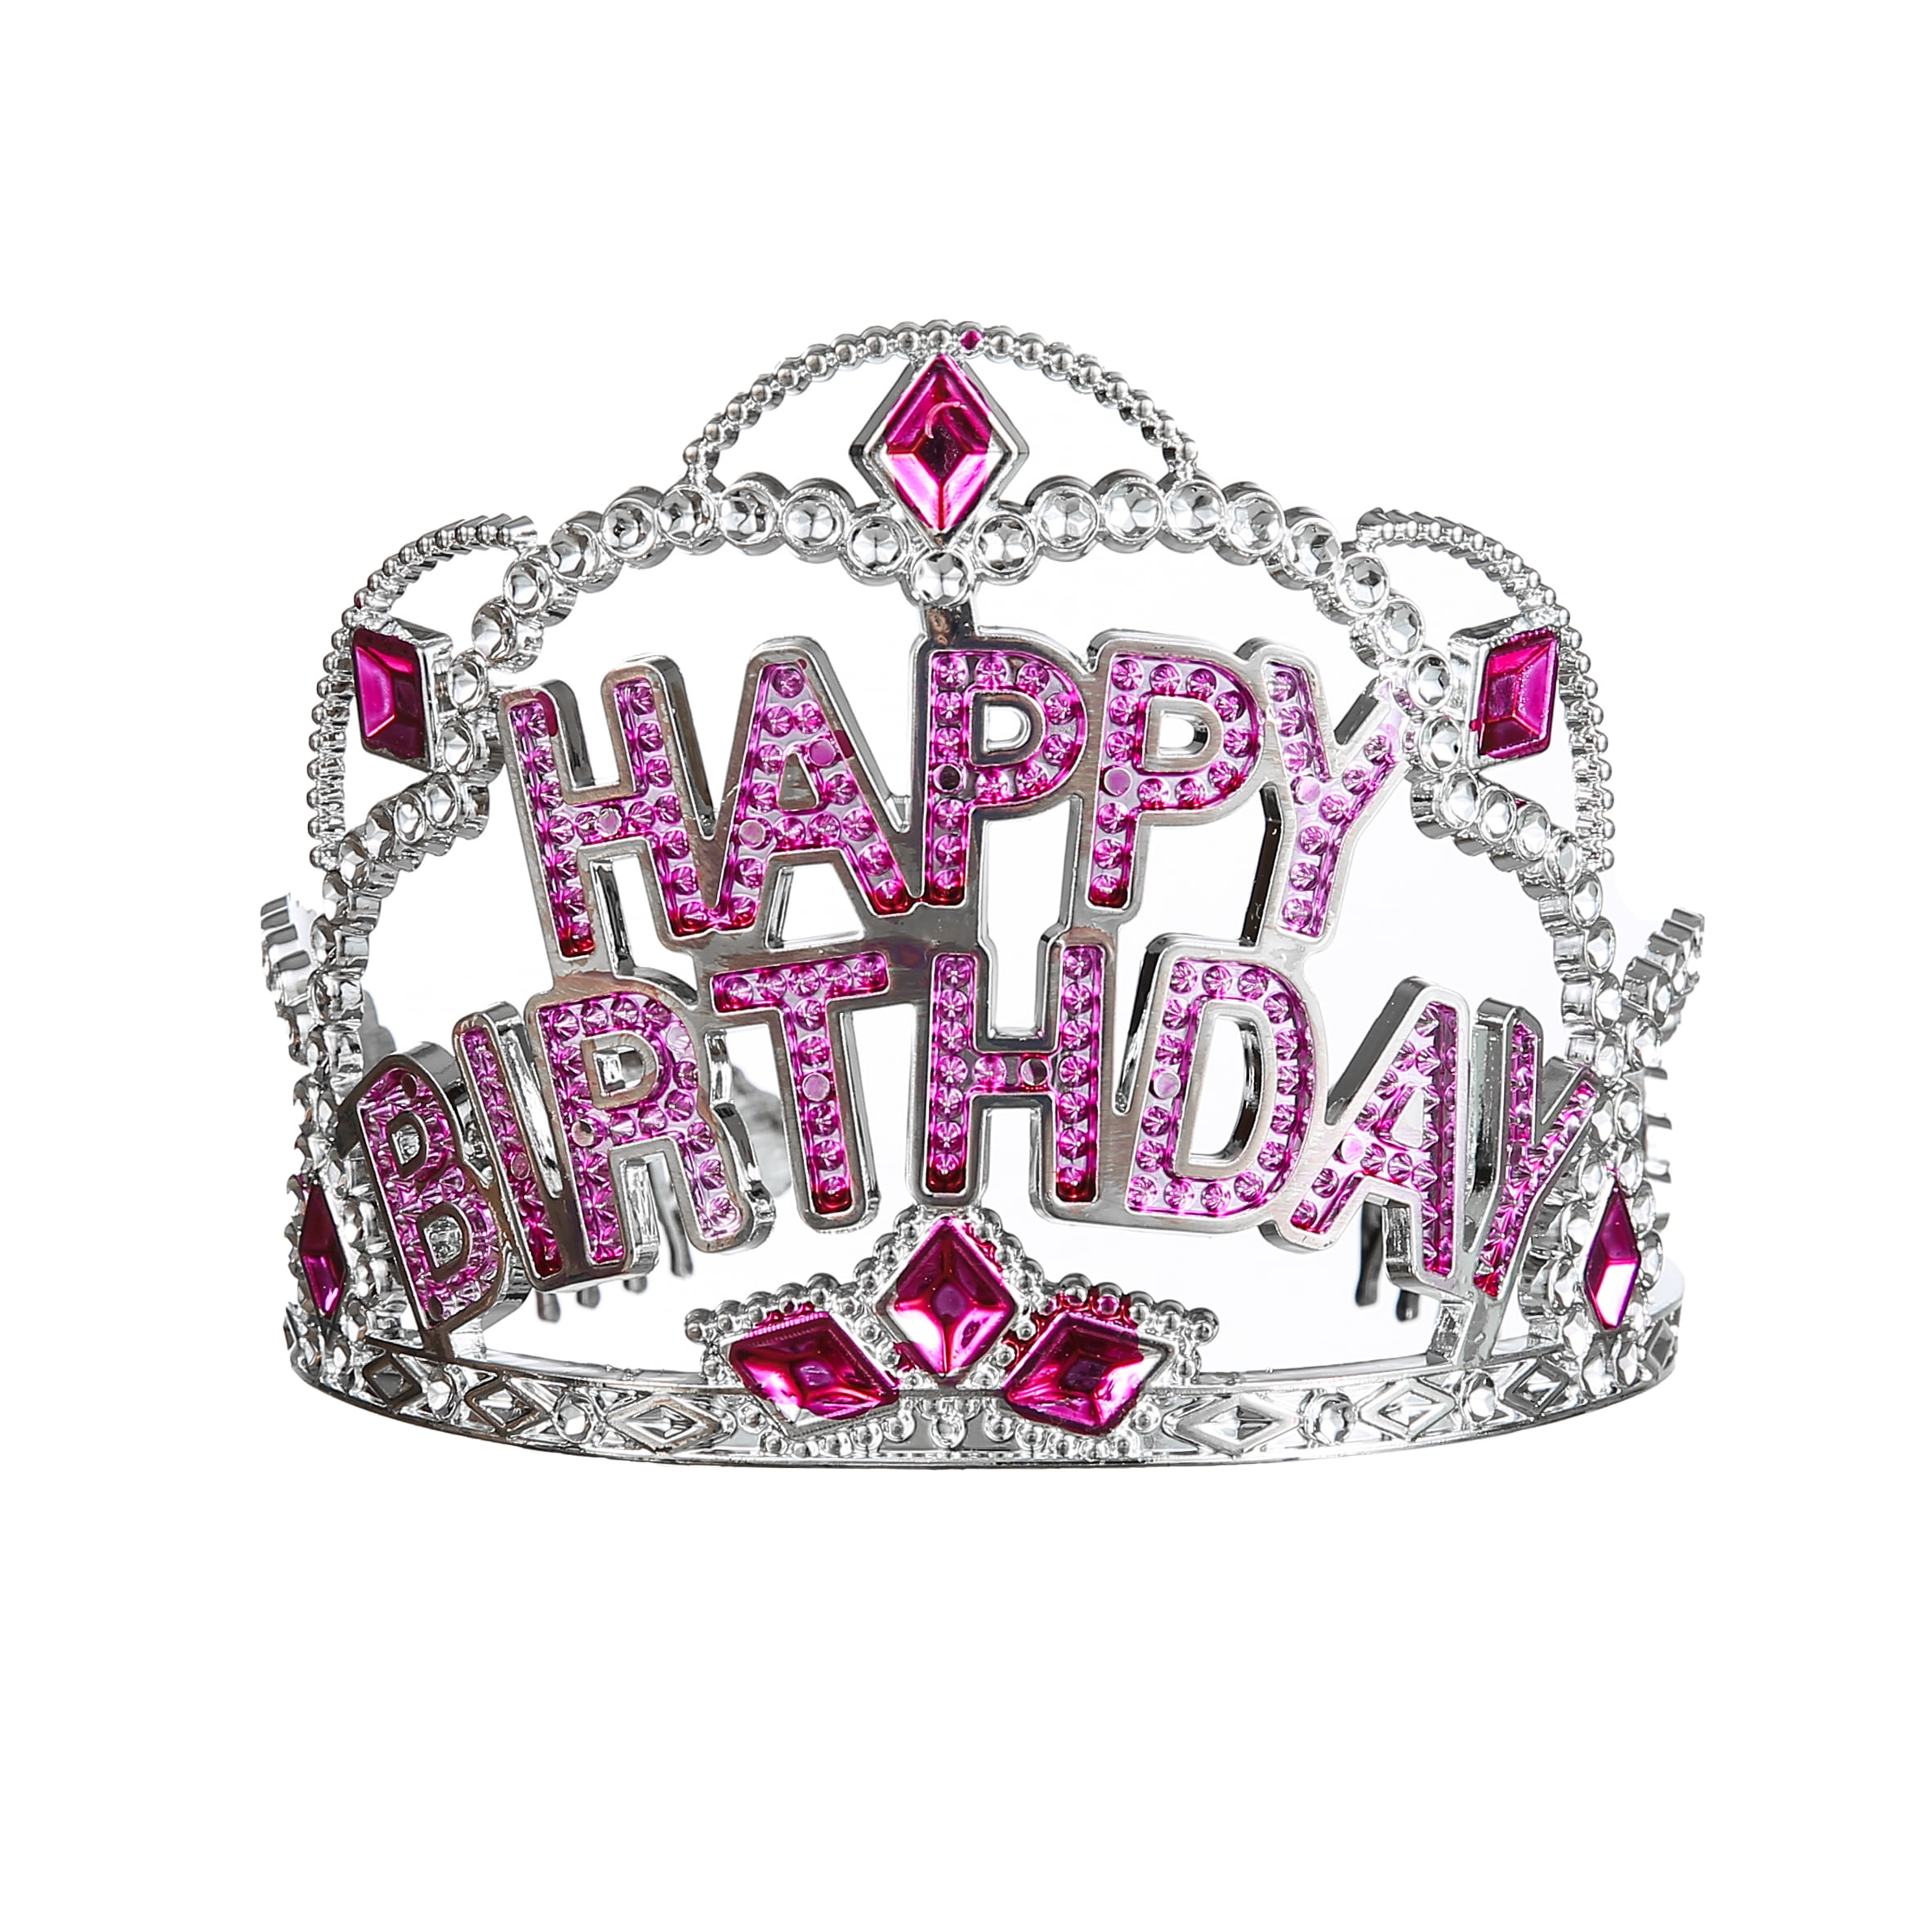 Way to Celebrate Happy Birthday Tiara 1ct - Party Favor Birthday Crown - Red & Silver Stones Tiara - Walmart.com